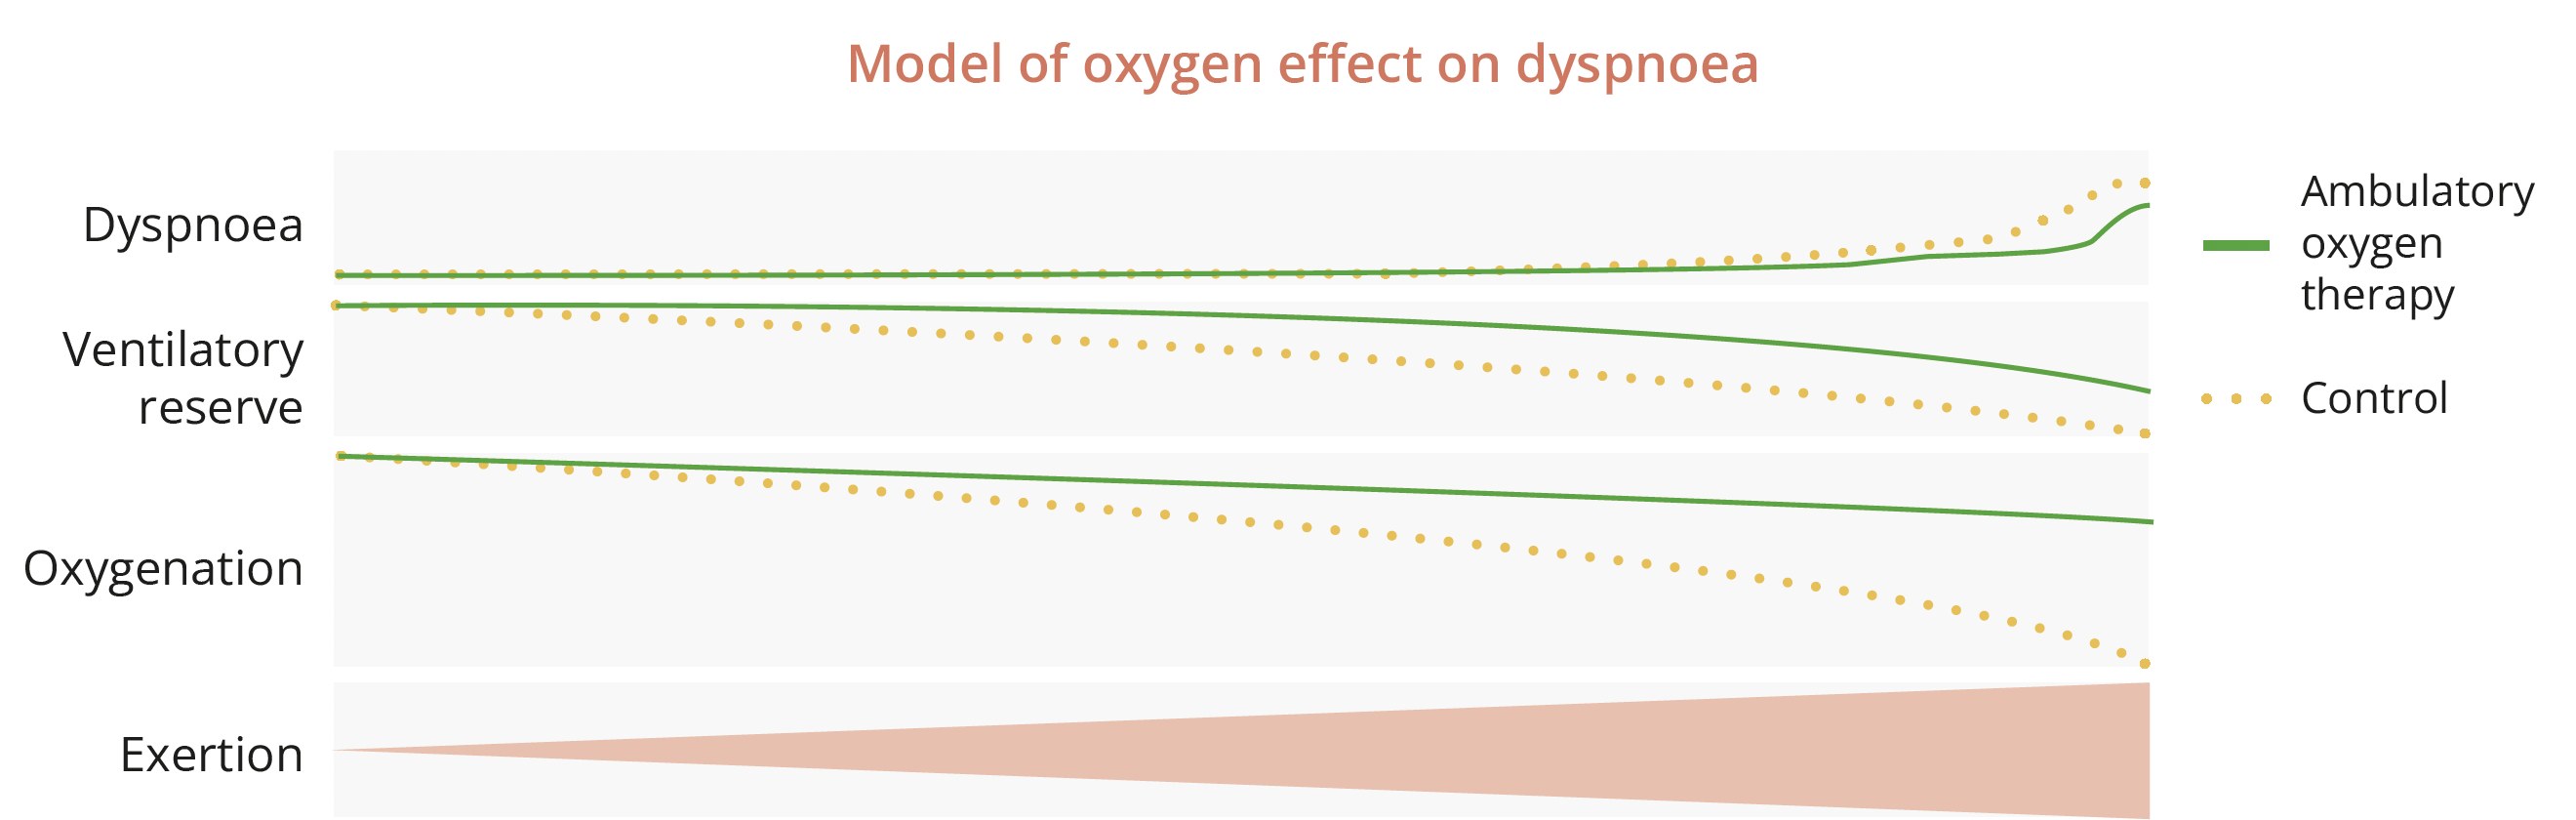 Ambulatory oxygen can delay the onset of dyspnoea